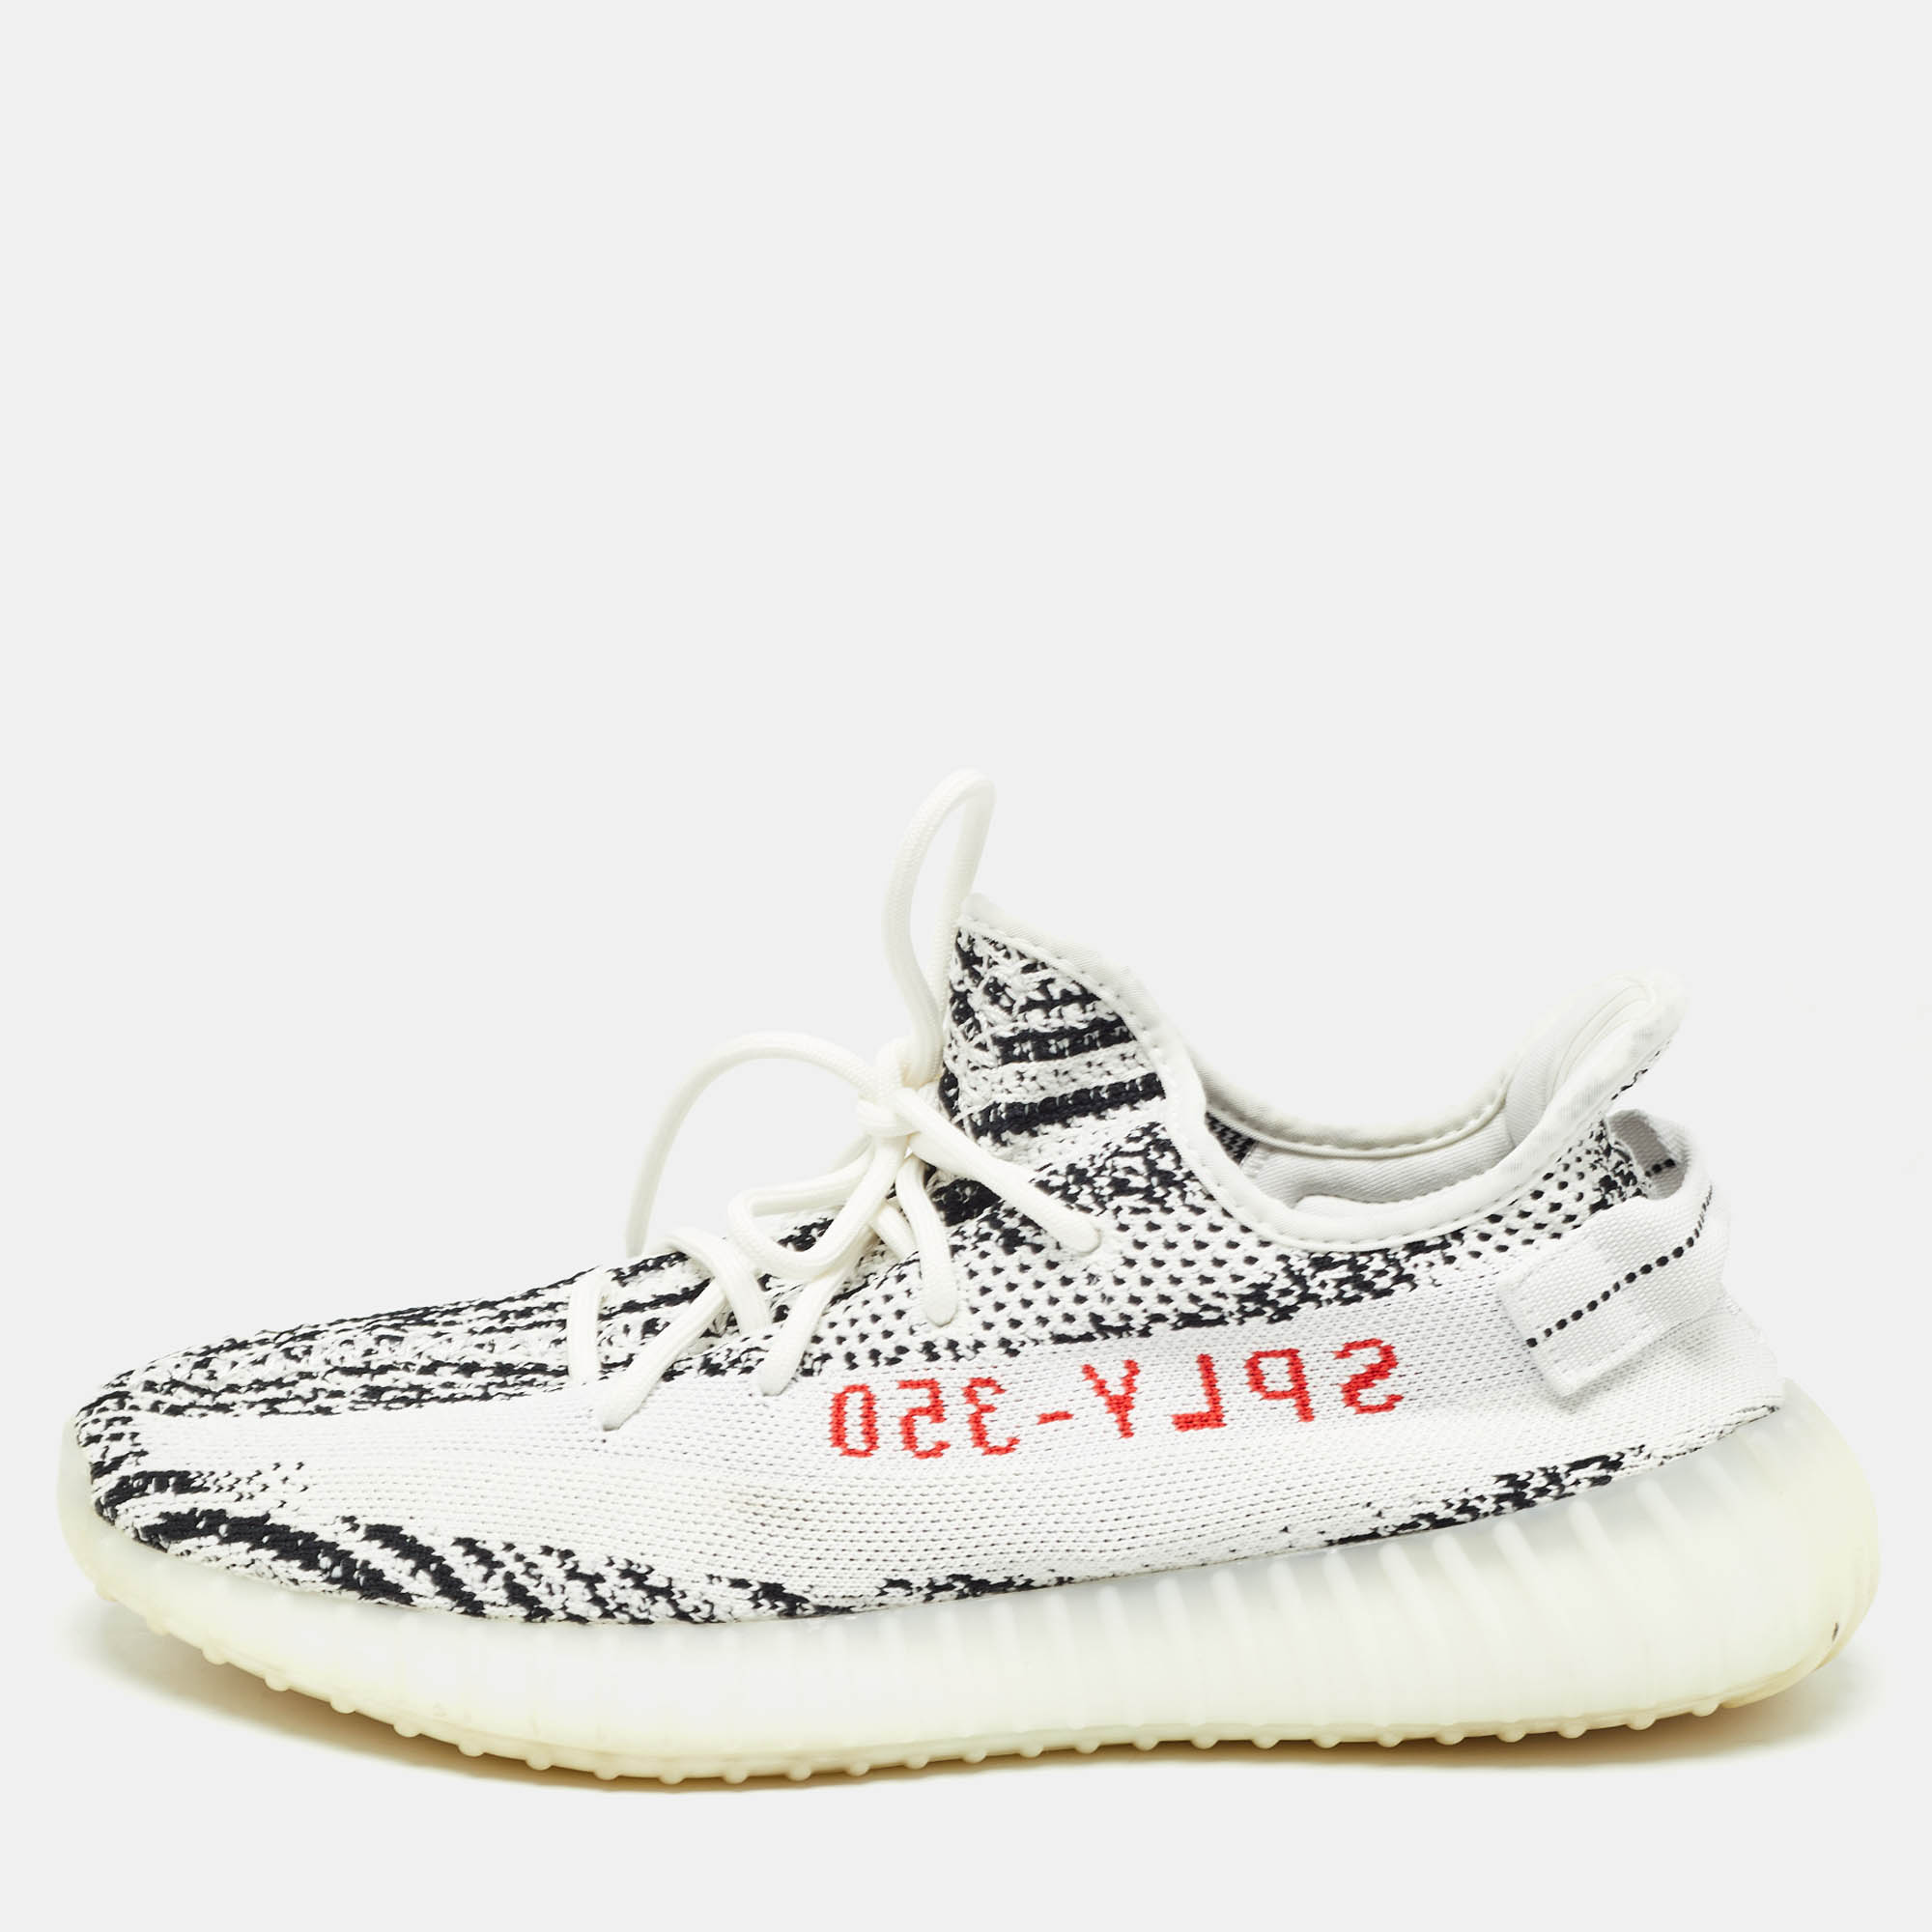 

Yeezy x Adidas White/Black Knit Fabric Boost 350 V2 Zebra Sneakers Size 44 2/3